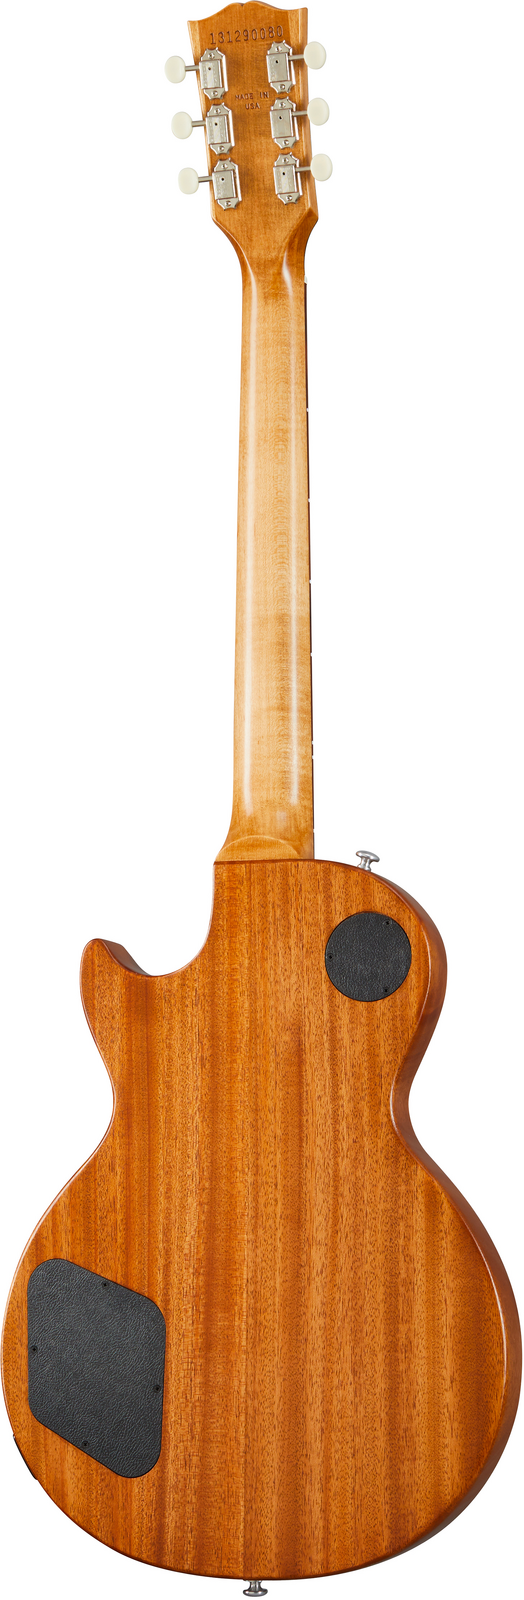 Gibson Les Paul Special Tribute Humbucker Natural Walnut Satin